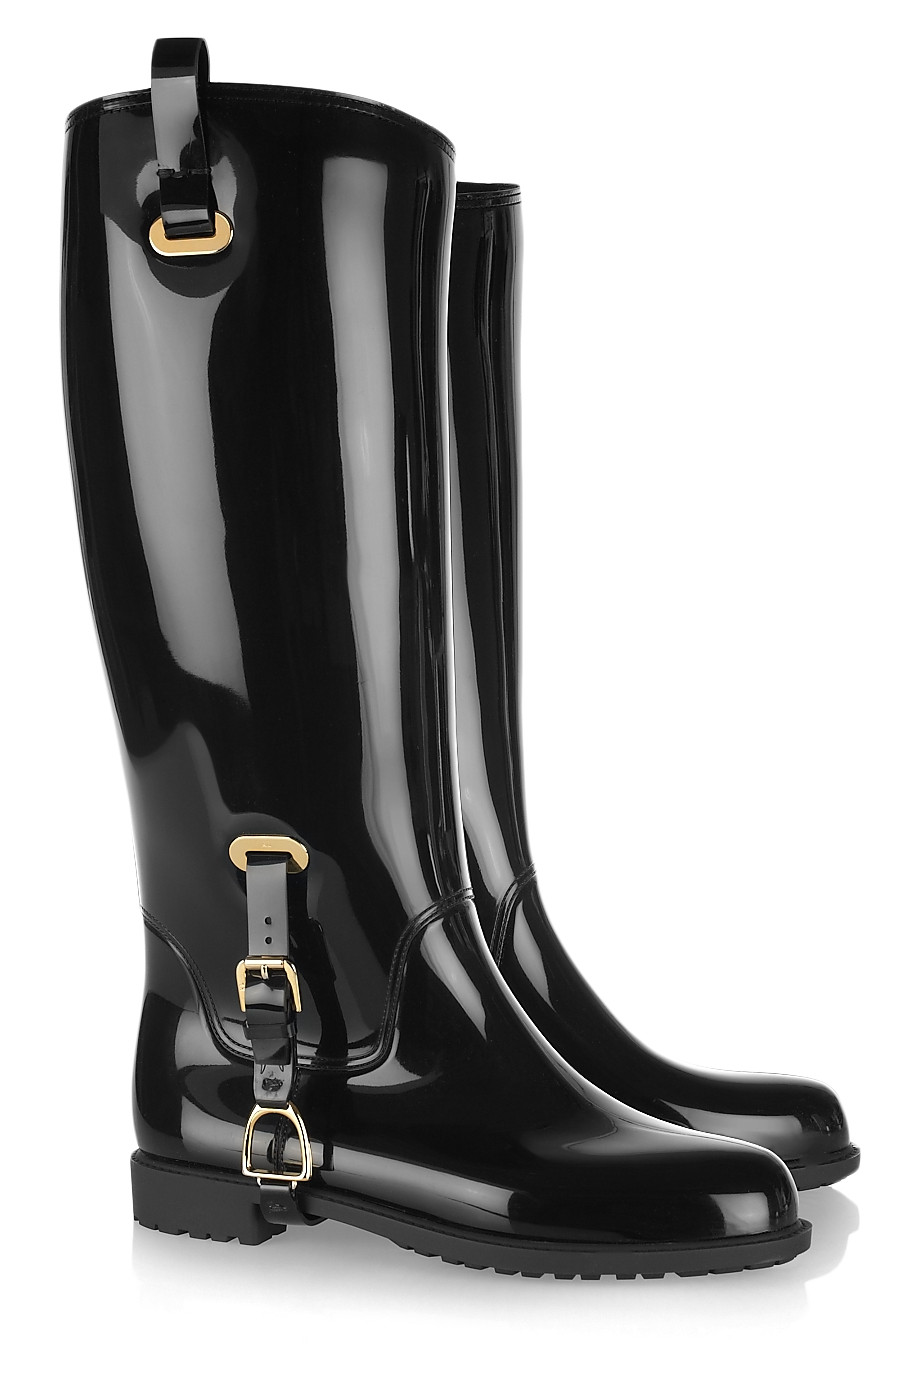 Ralph lauren collection Odette Rubber Rain Boot in Black | Lyst